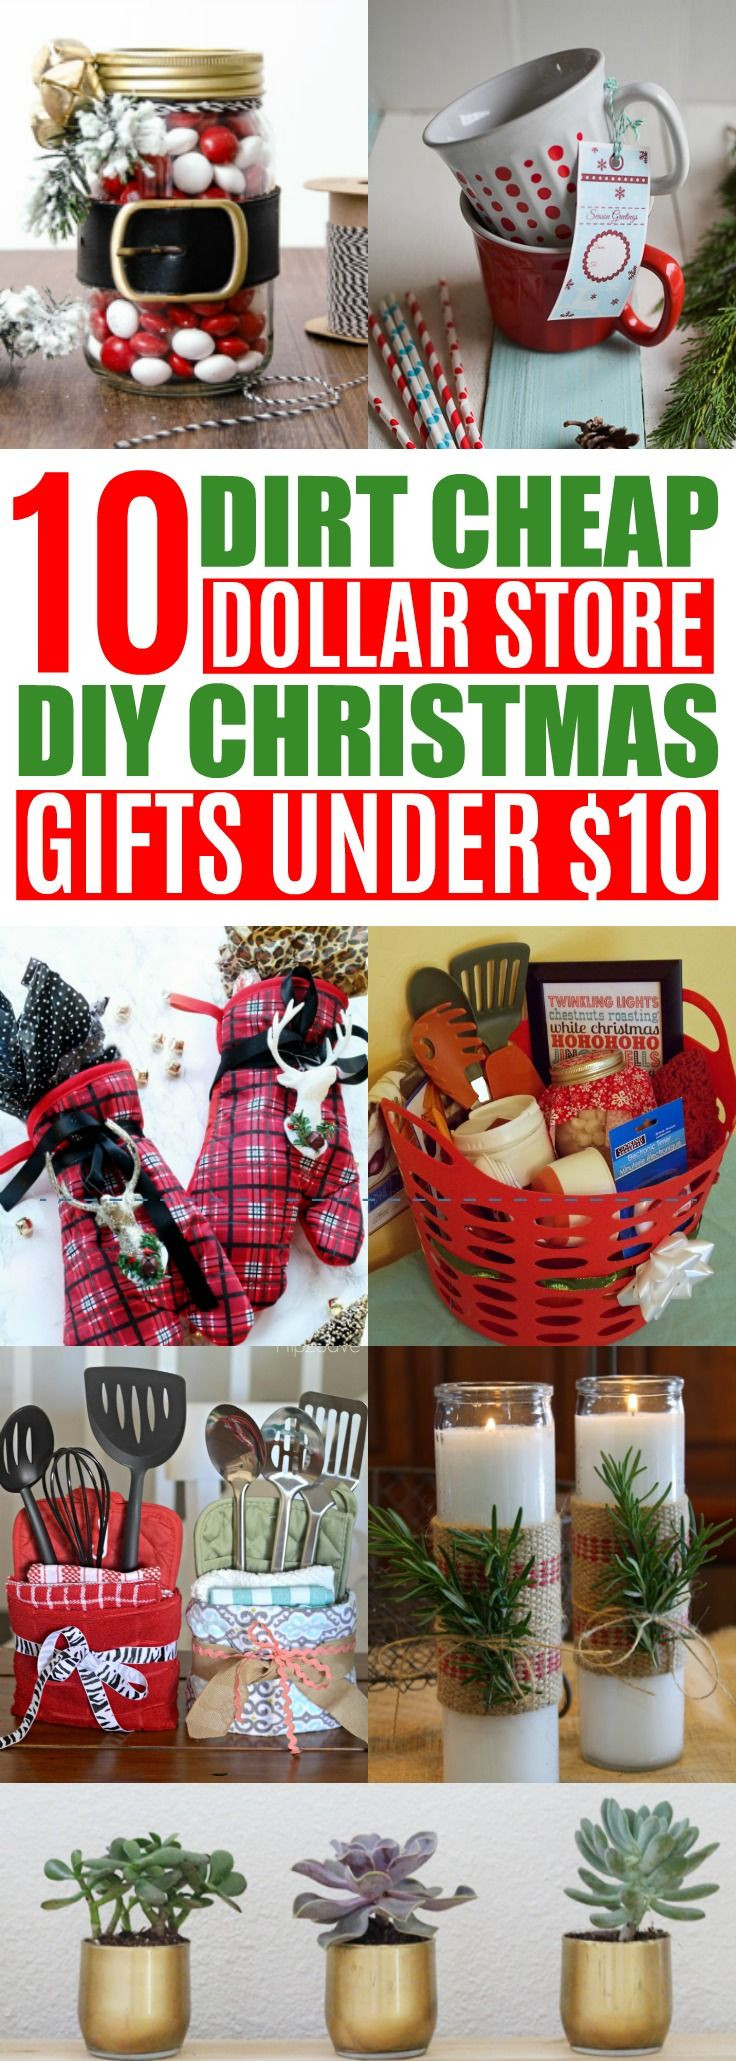 DIY Dollar Store Gift Ideas
 10 DIY Cheap Christmas Gift Ideas From the Dollar Store